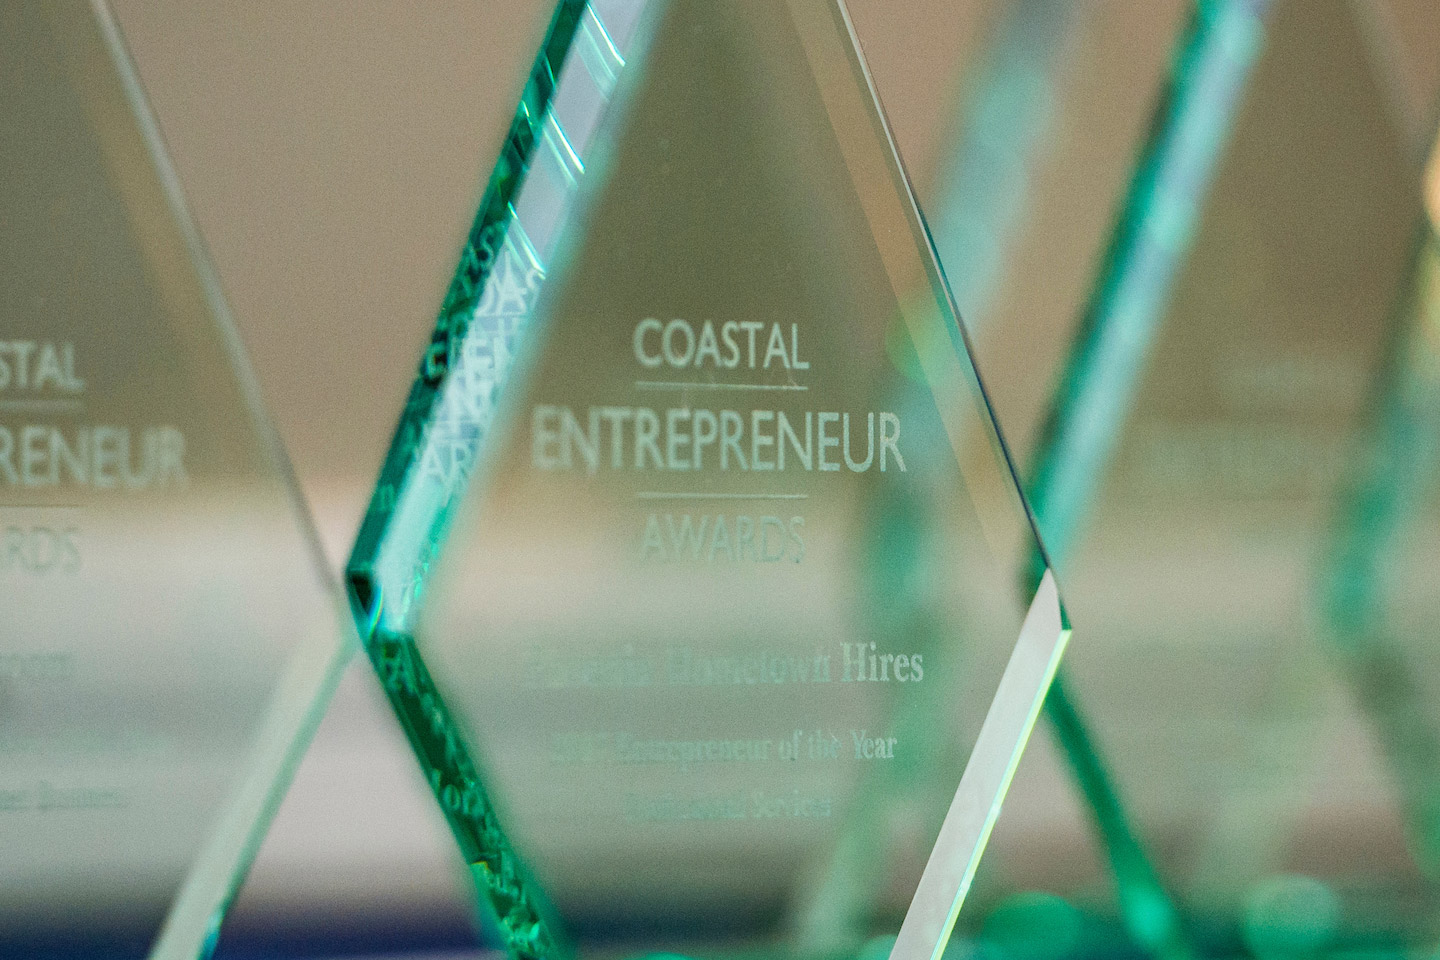 Coastal Entrepreneur Awards